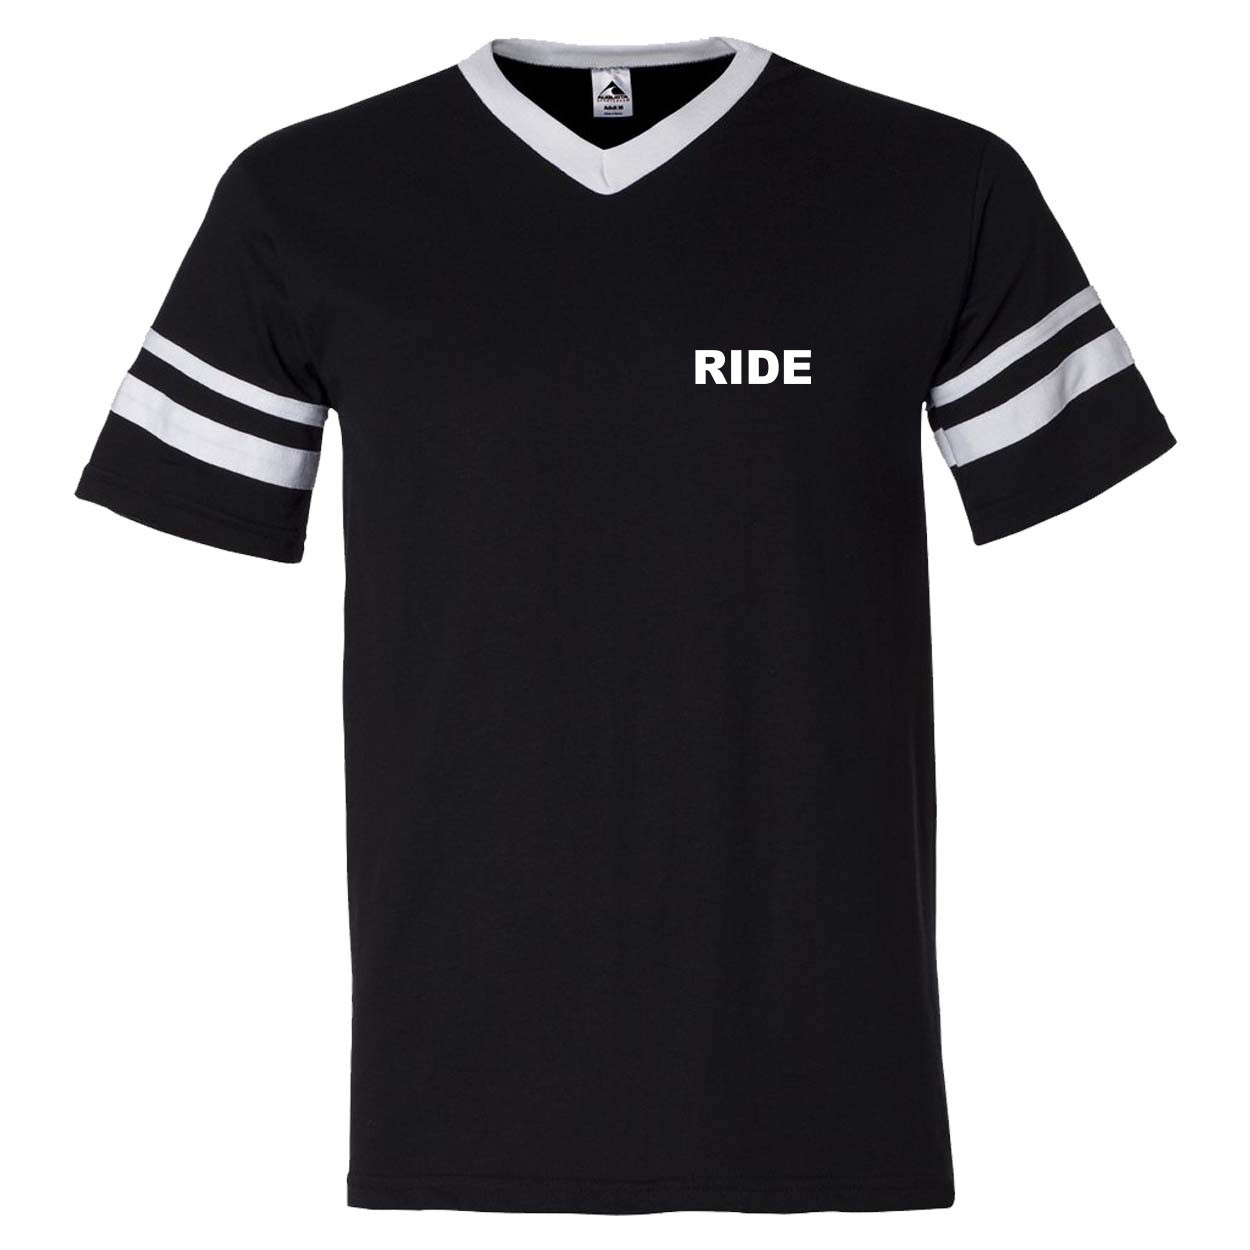 Ride Brand Logo Night Out Premium Striped Jersey T-Shirt Black/White (White Logo)